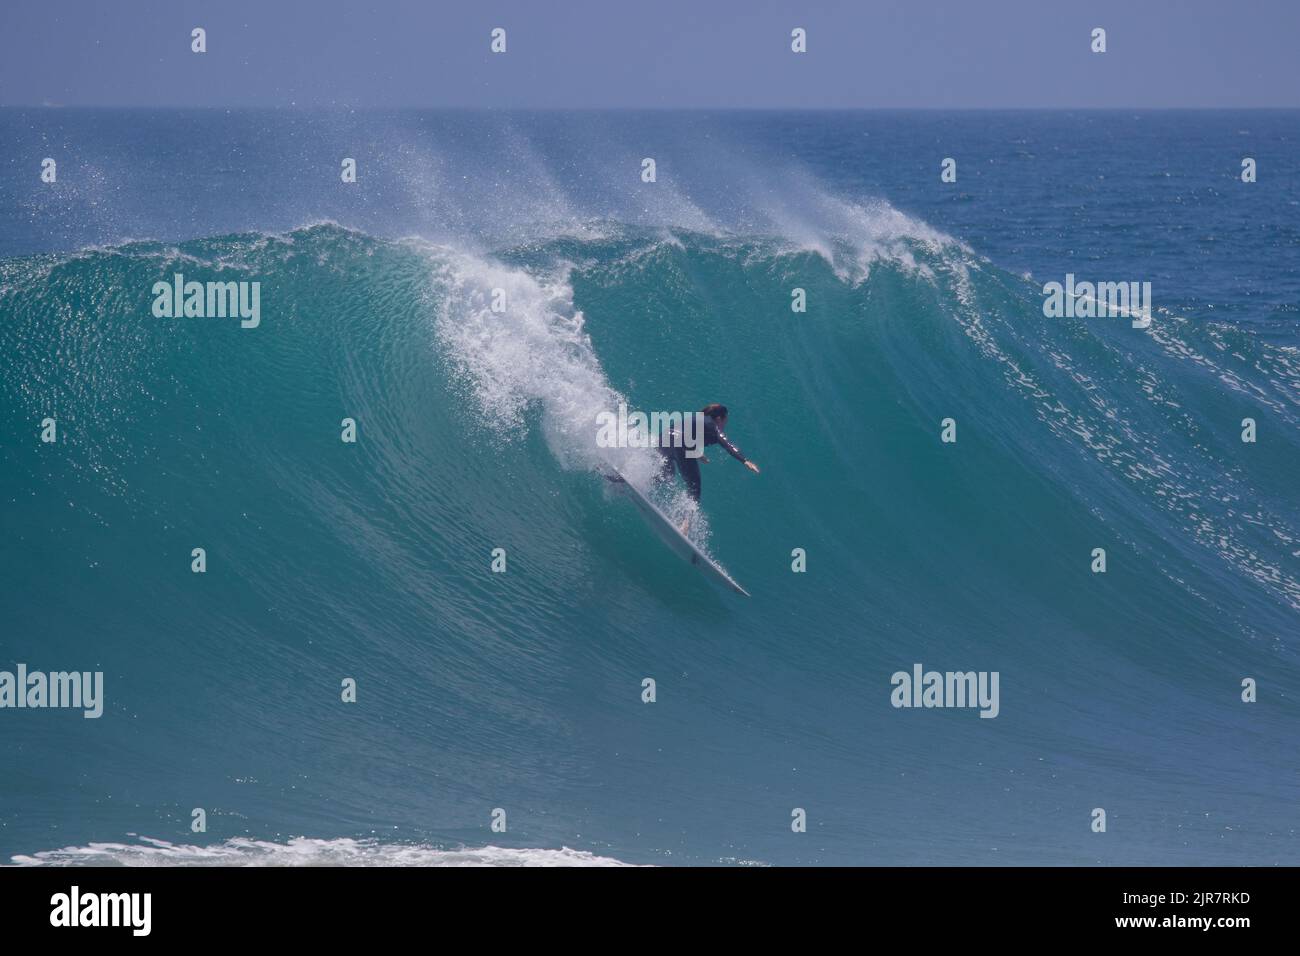 Surfer riding wave Newport Beach California, USA Stock Photo